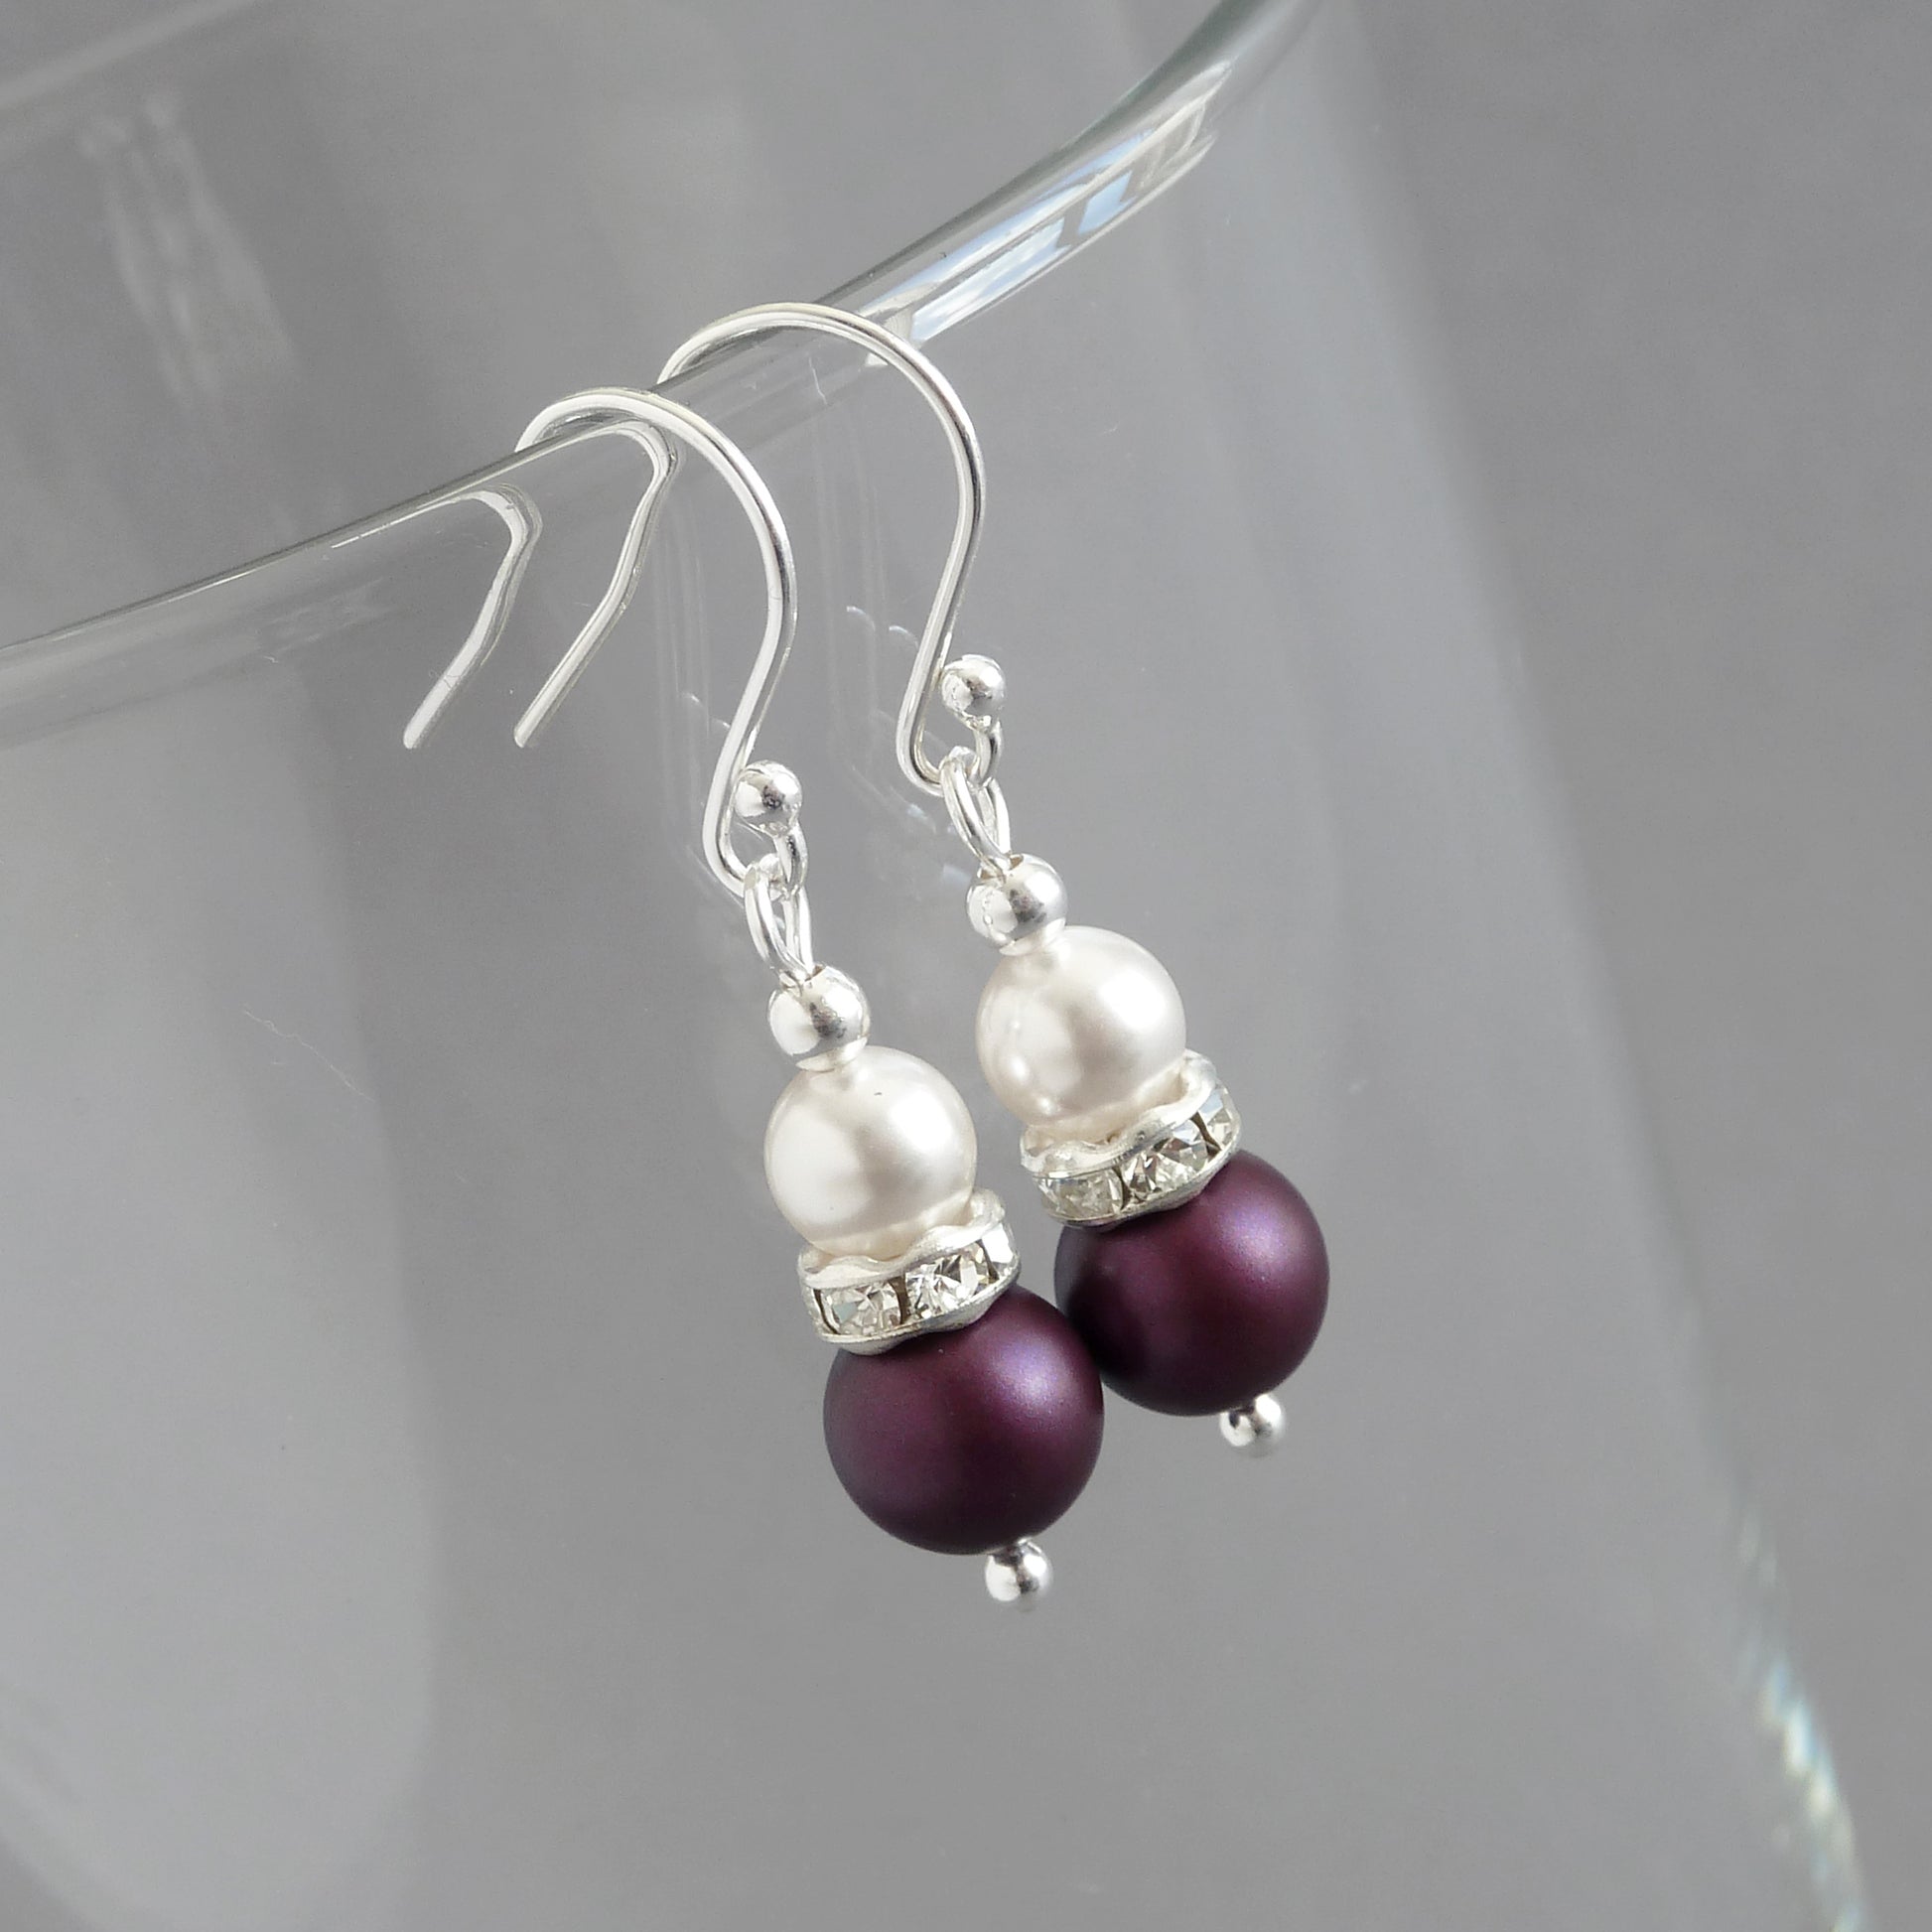 Plum pearl drop earrings with silver hooks